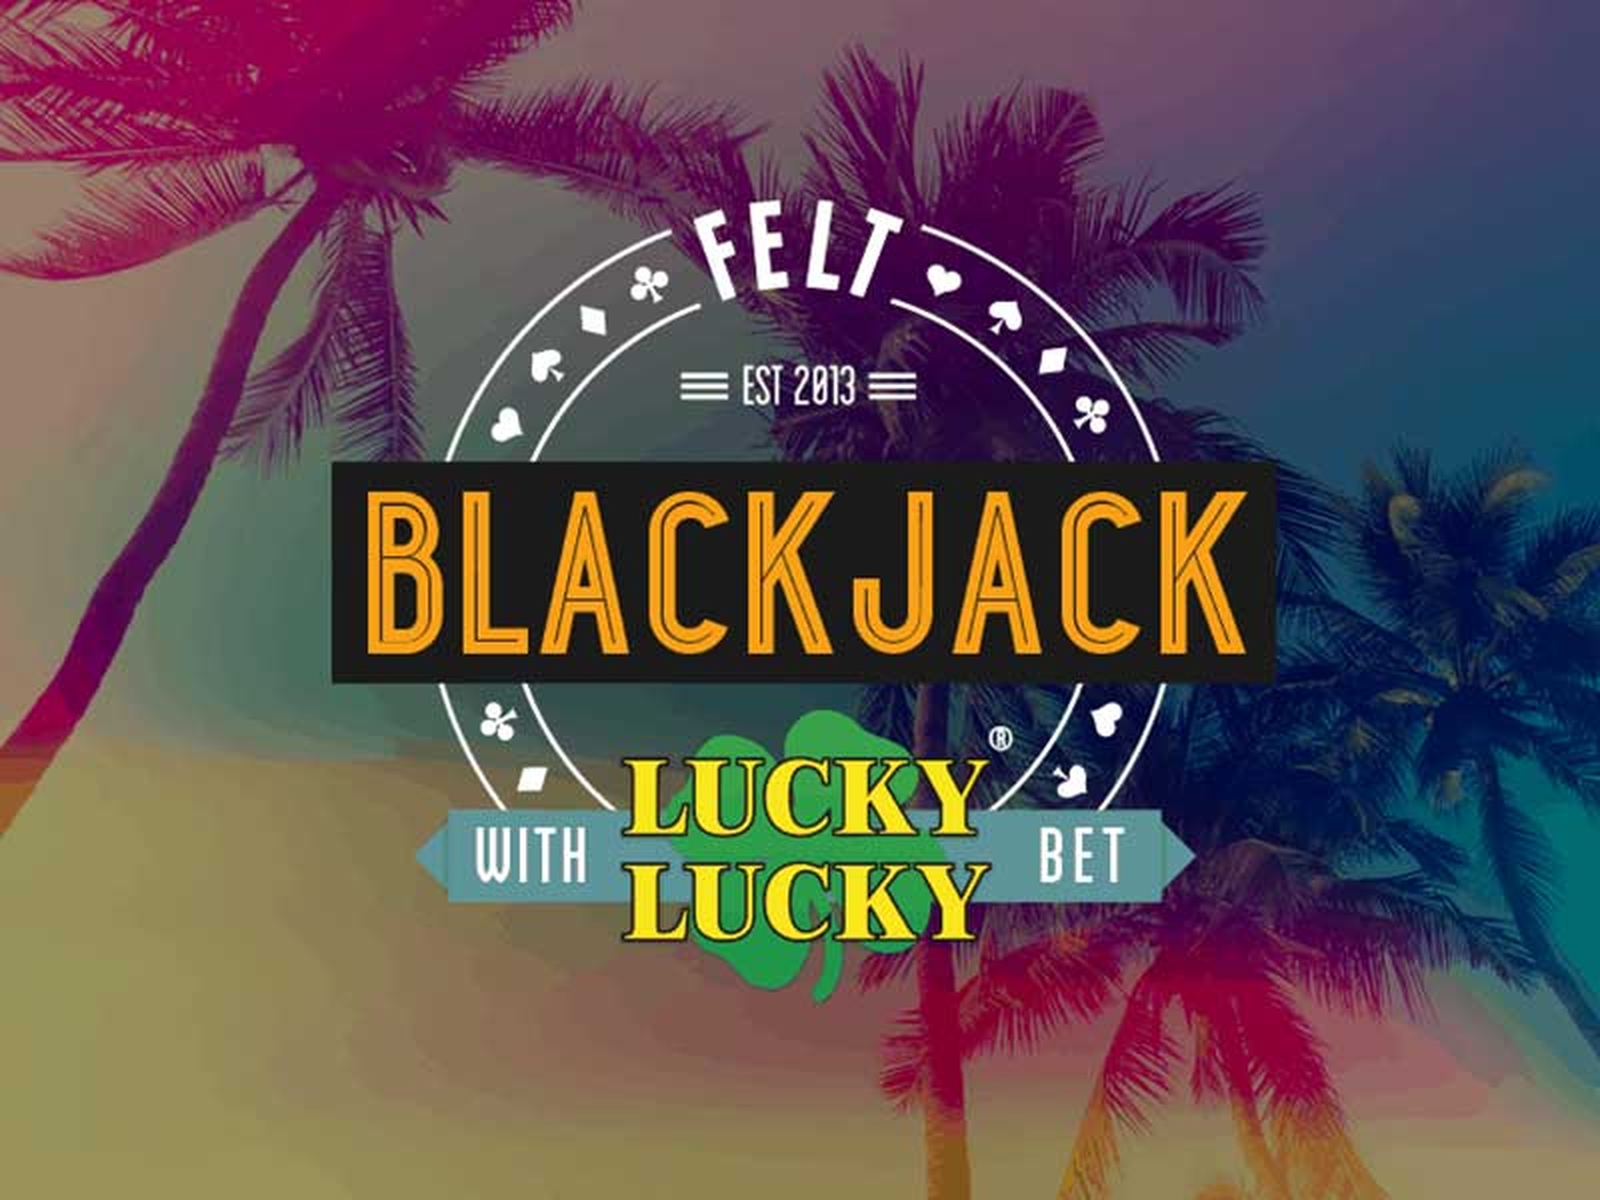 The Blackjack Lucky Lucky Online Slot Demo Game by Felt